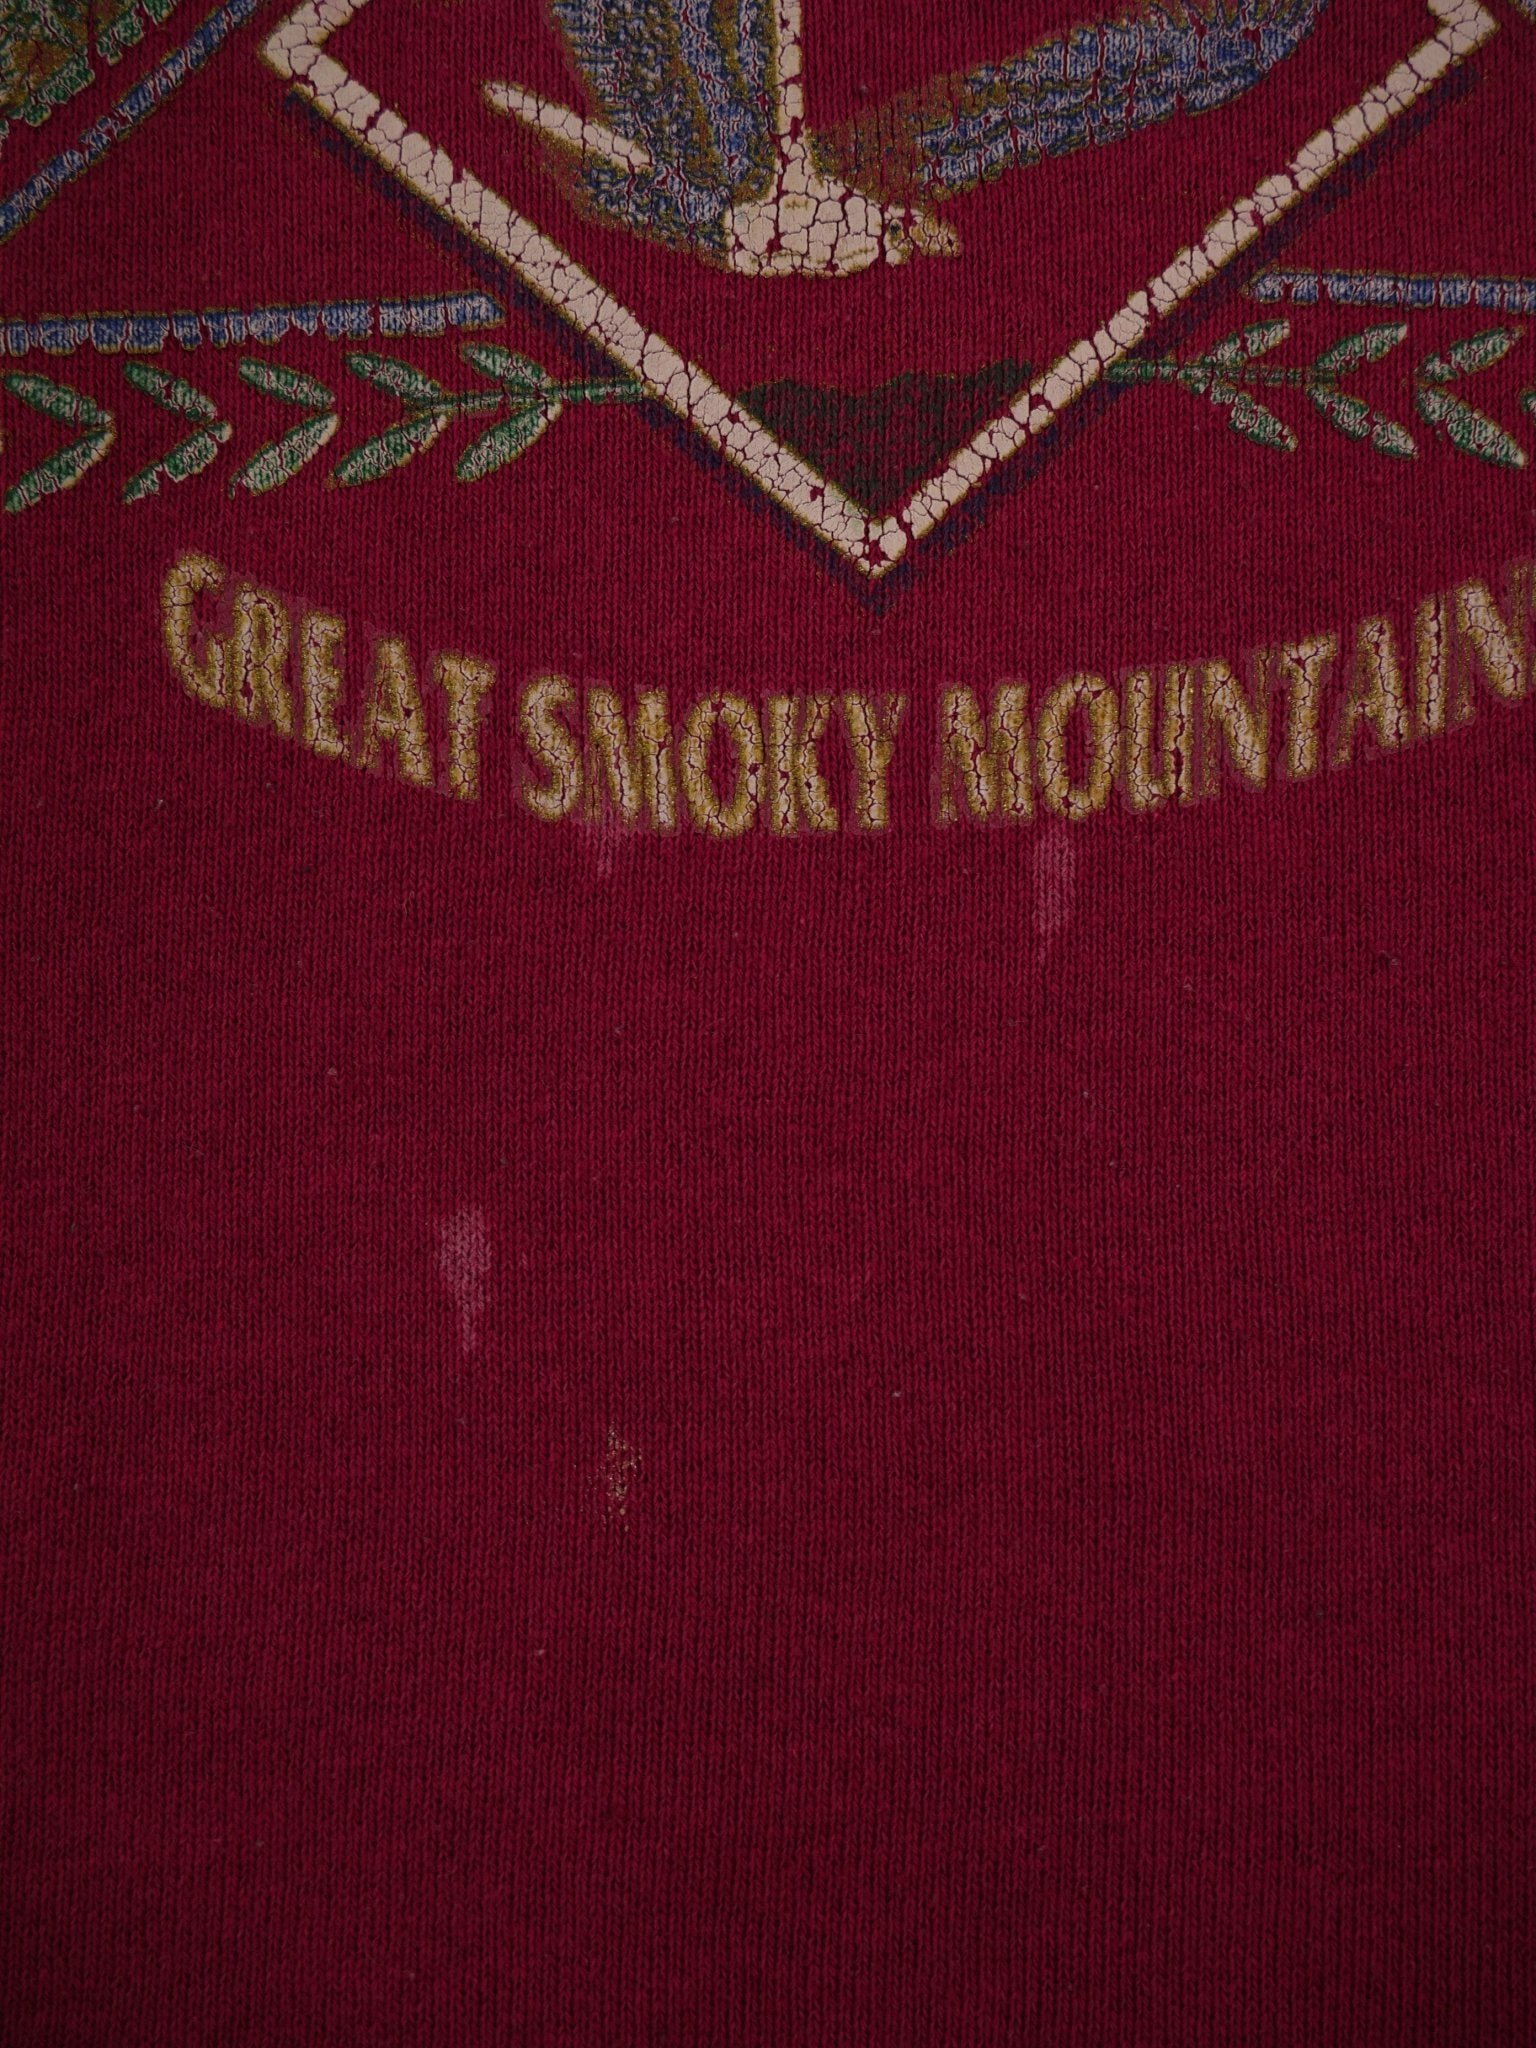 Gatlinburg printed Graphic Vintage Sweater - Peeces